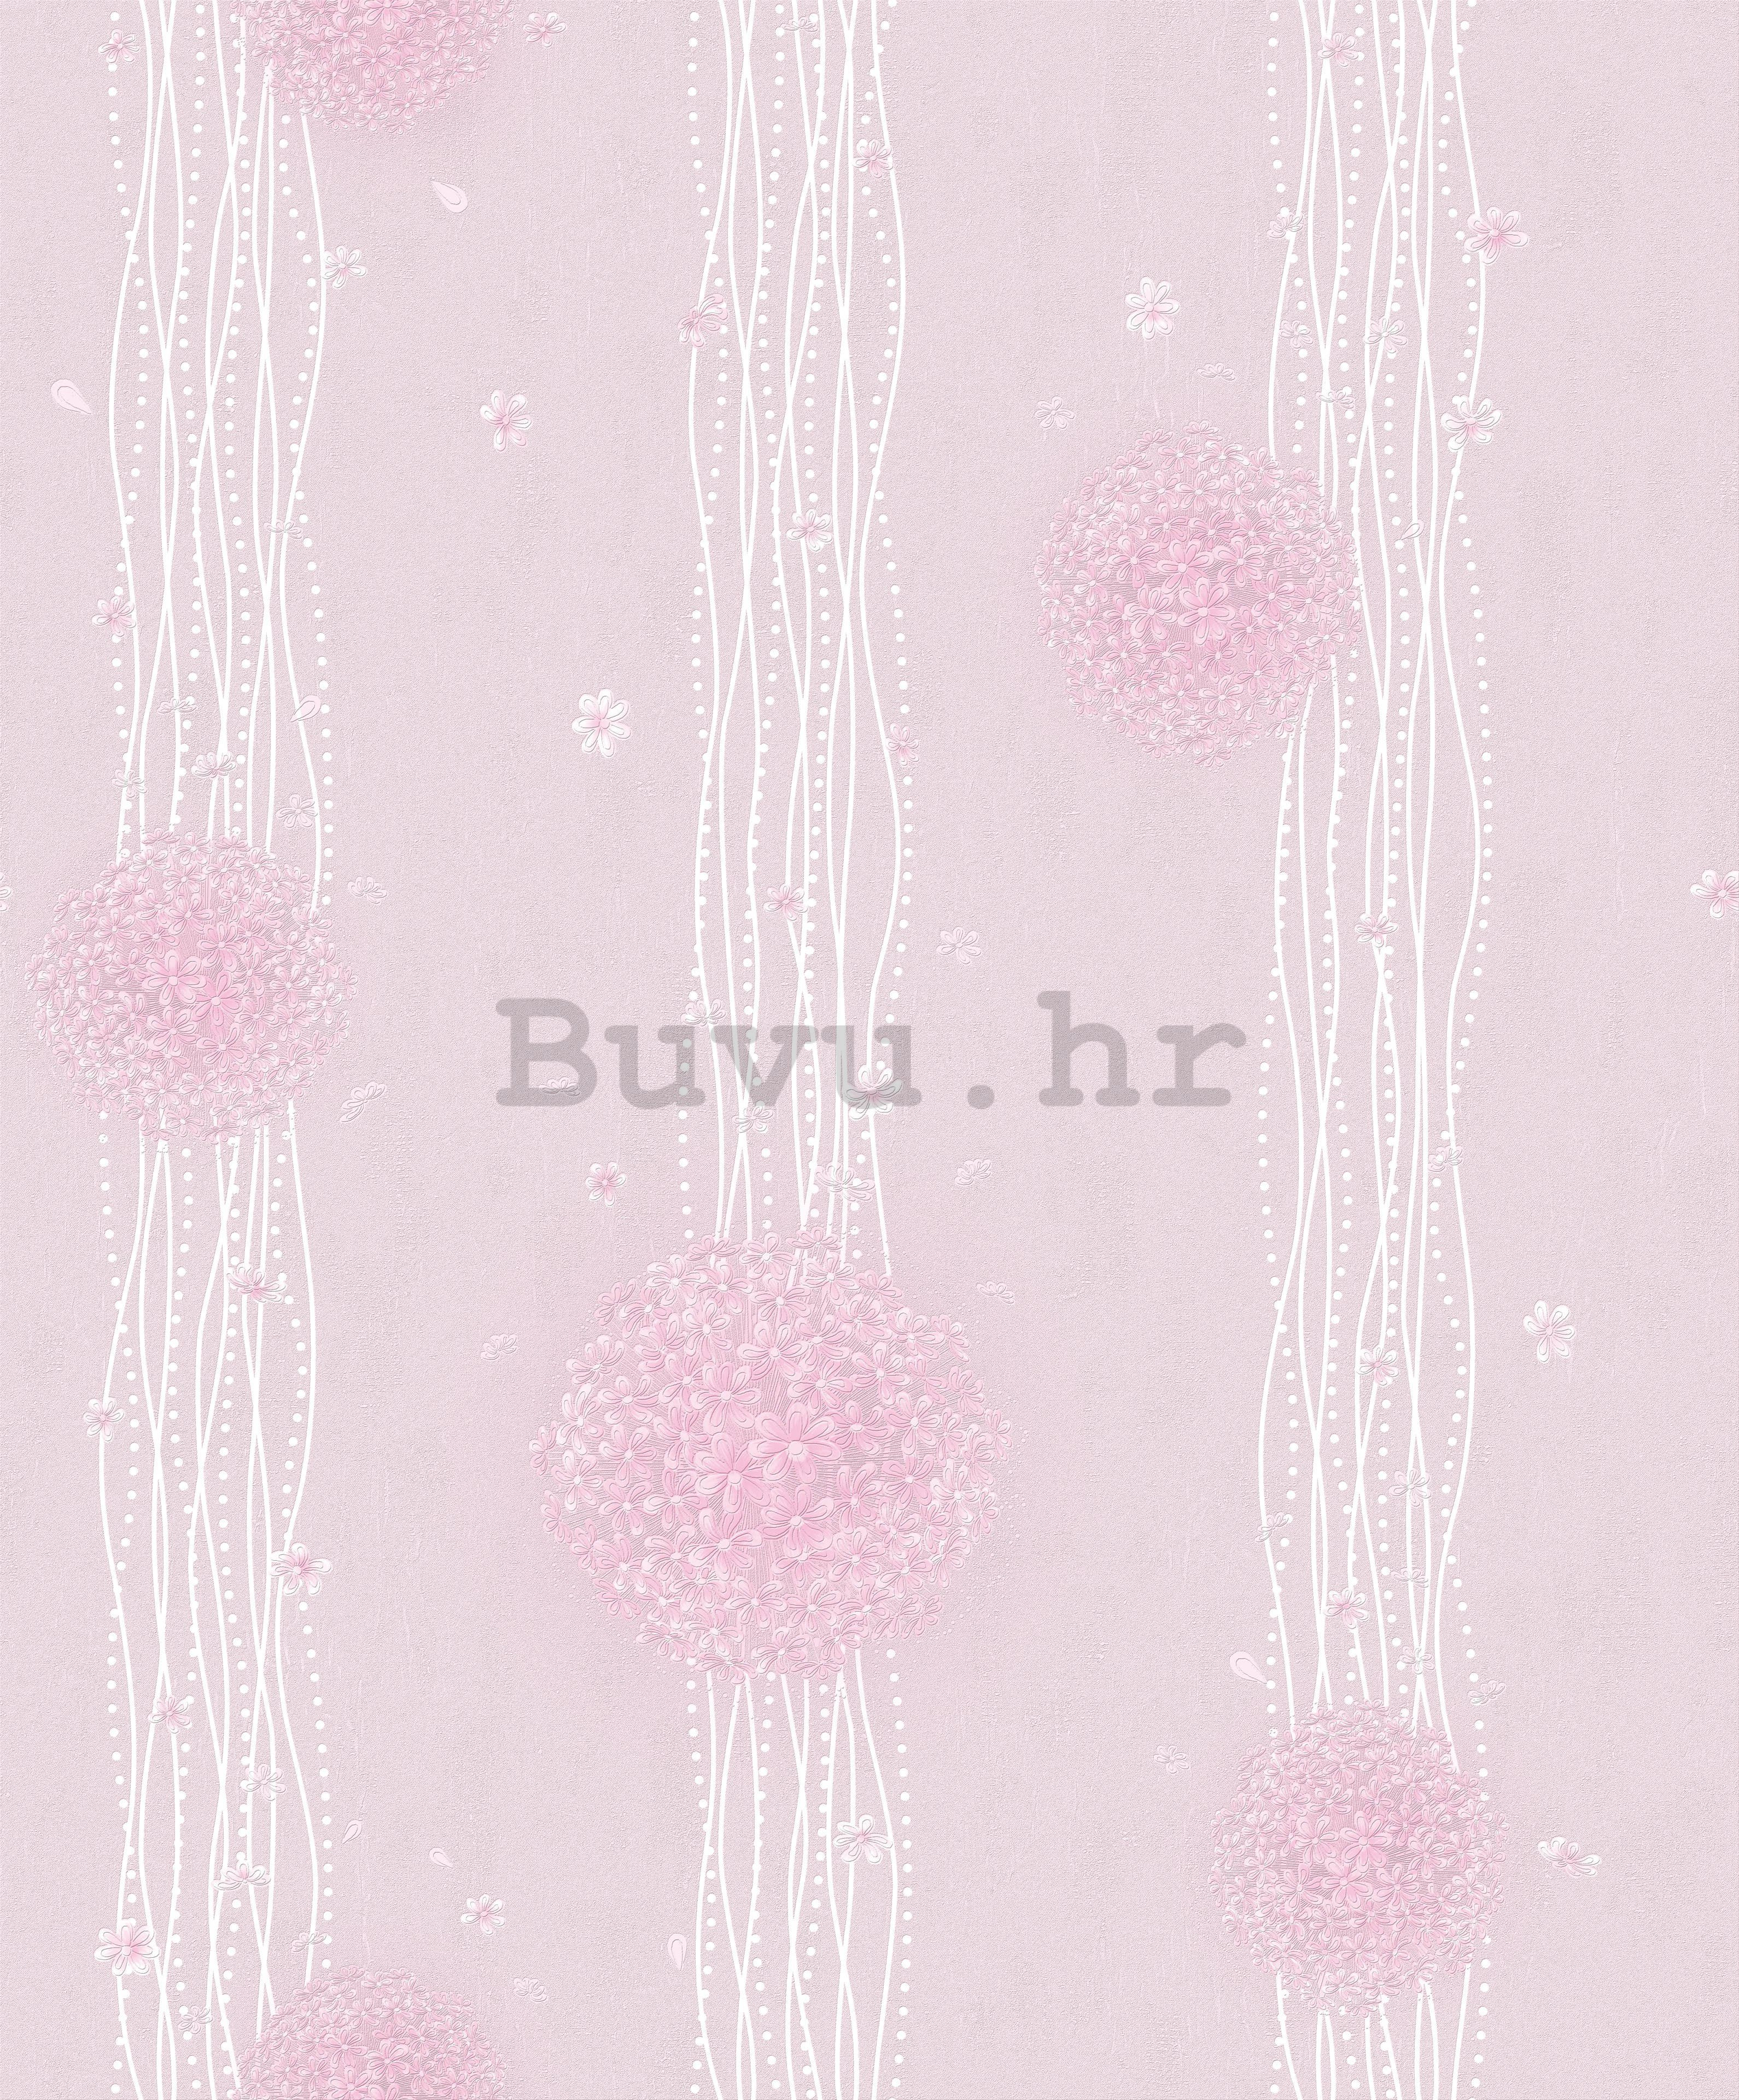 Vinilna periva tapeta s malim roza cvjetićima na roza pozadini